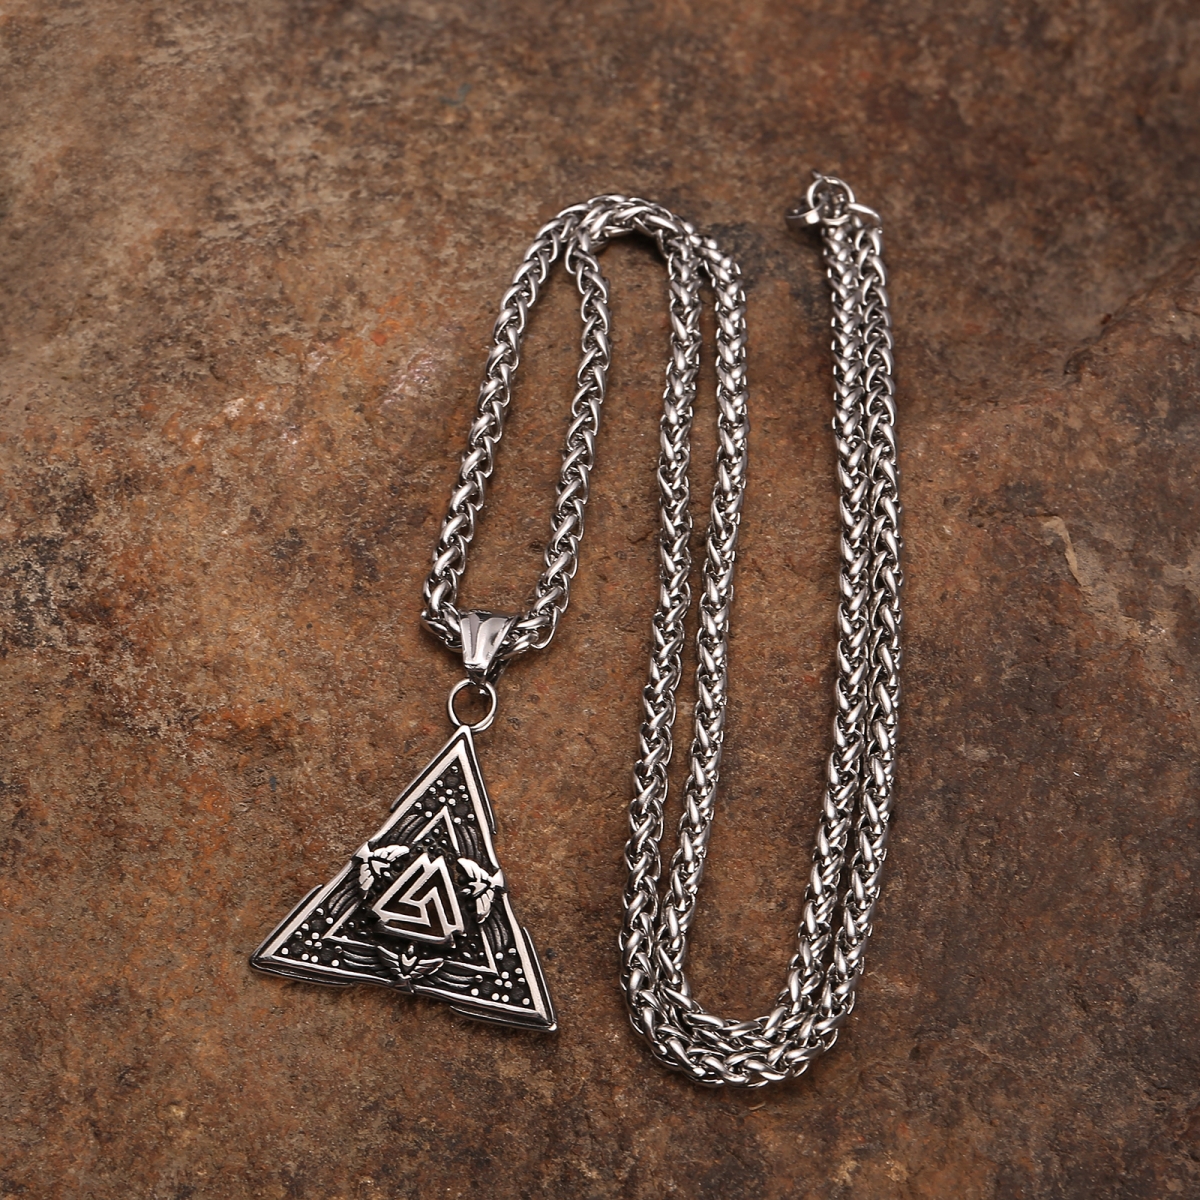 Valknut Necklace US$2.9/PC-NORSECOLLECTION- Viking Jewelry,Viking Necklace,Viking Bracelet,Viking Rings,Viking Mugs,Viking Accessories,Viking Crafts